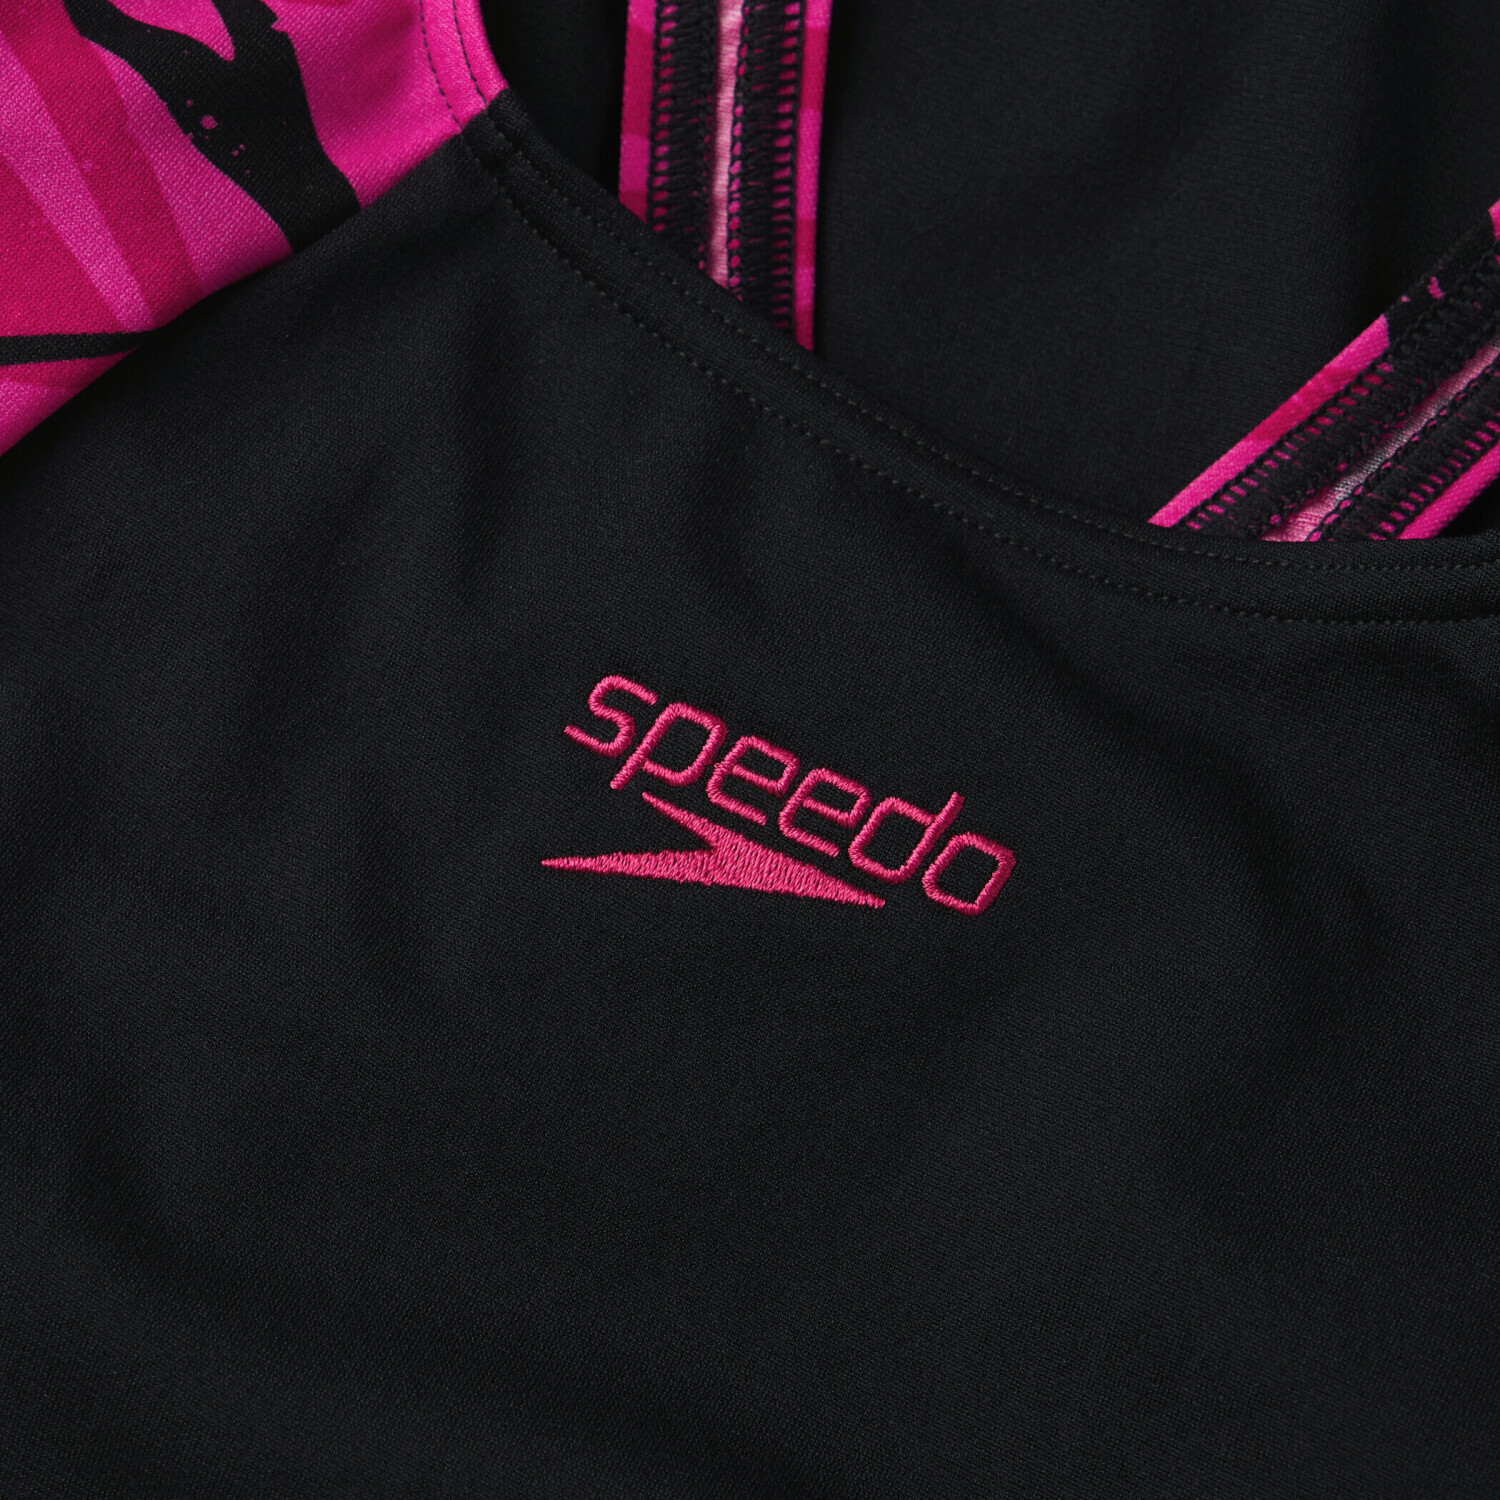 Speedo Hyperboom Splice Muscleback Swimsuit, Black/Electric Pink at John  Lewis & Partners